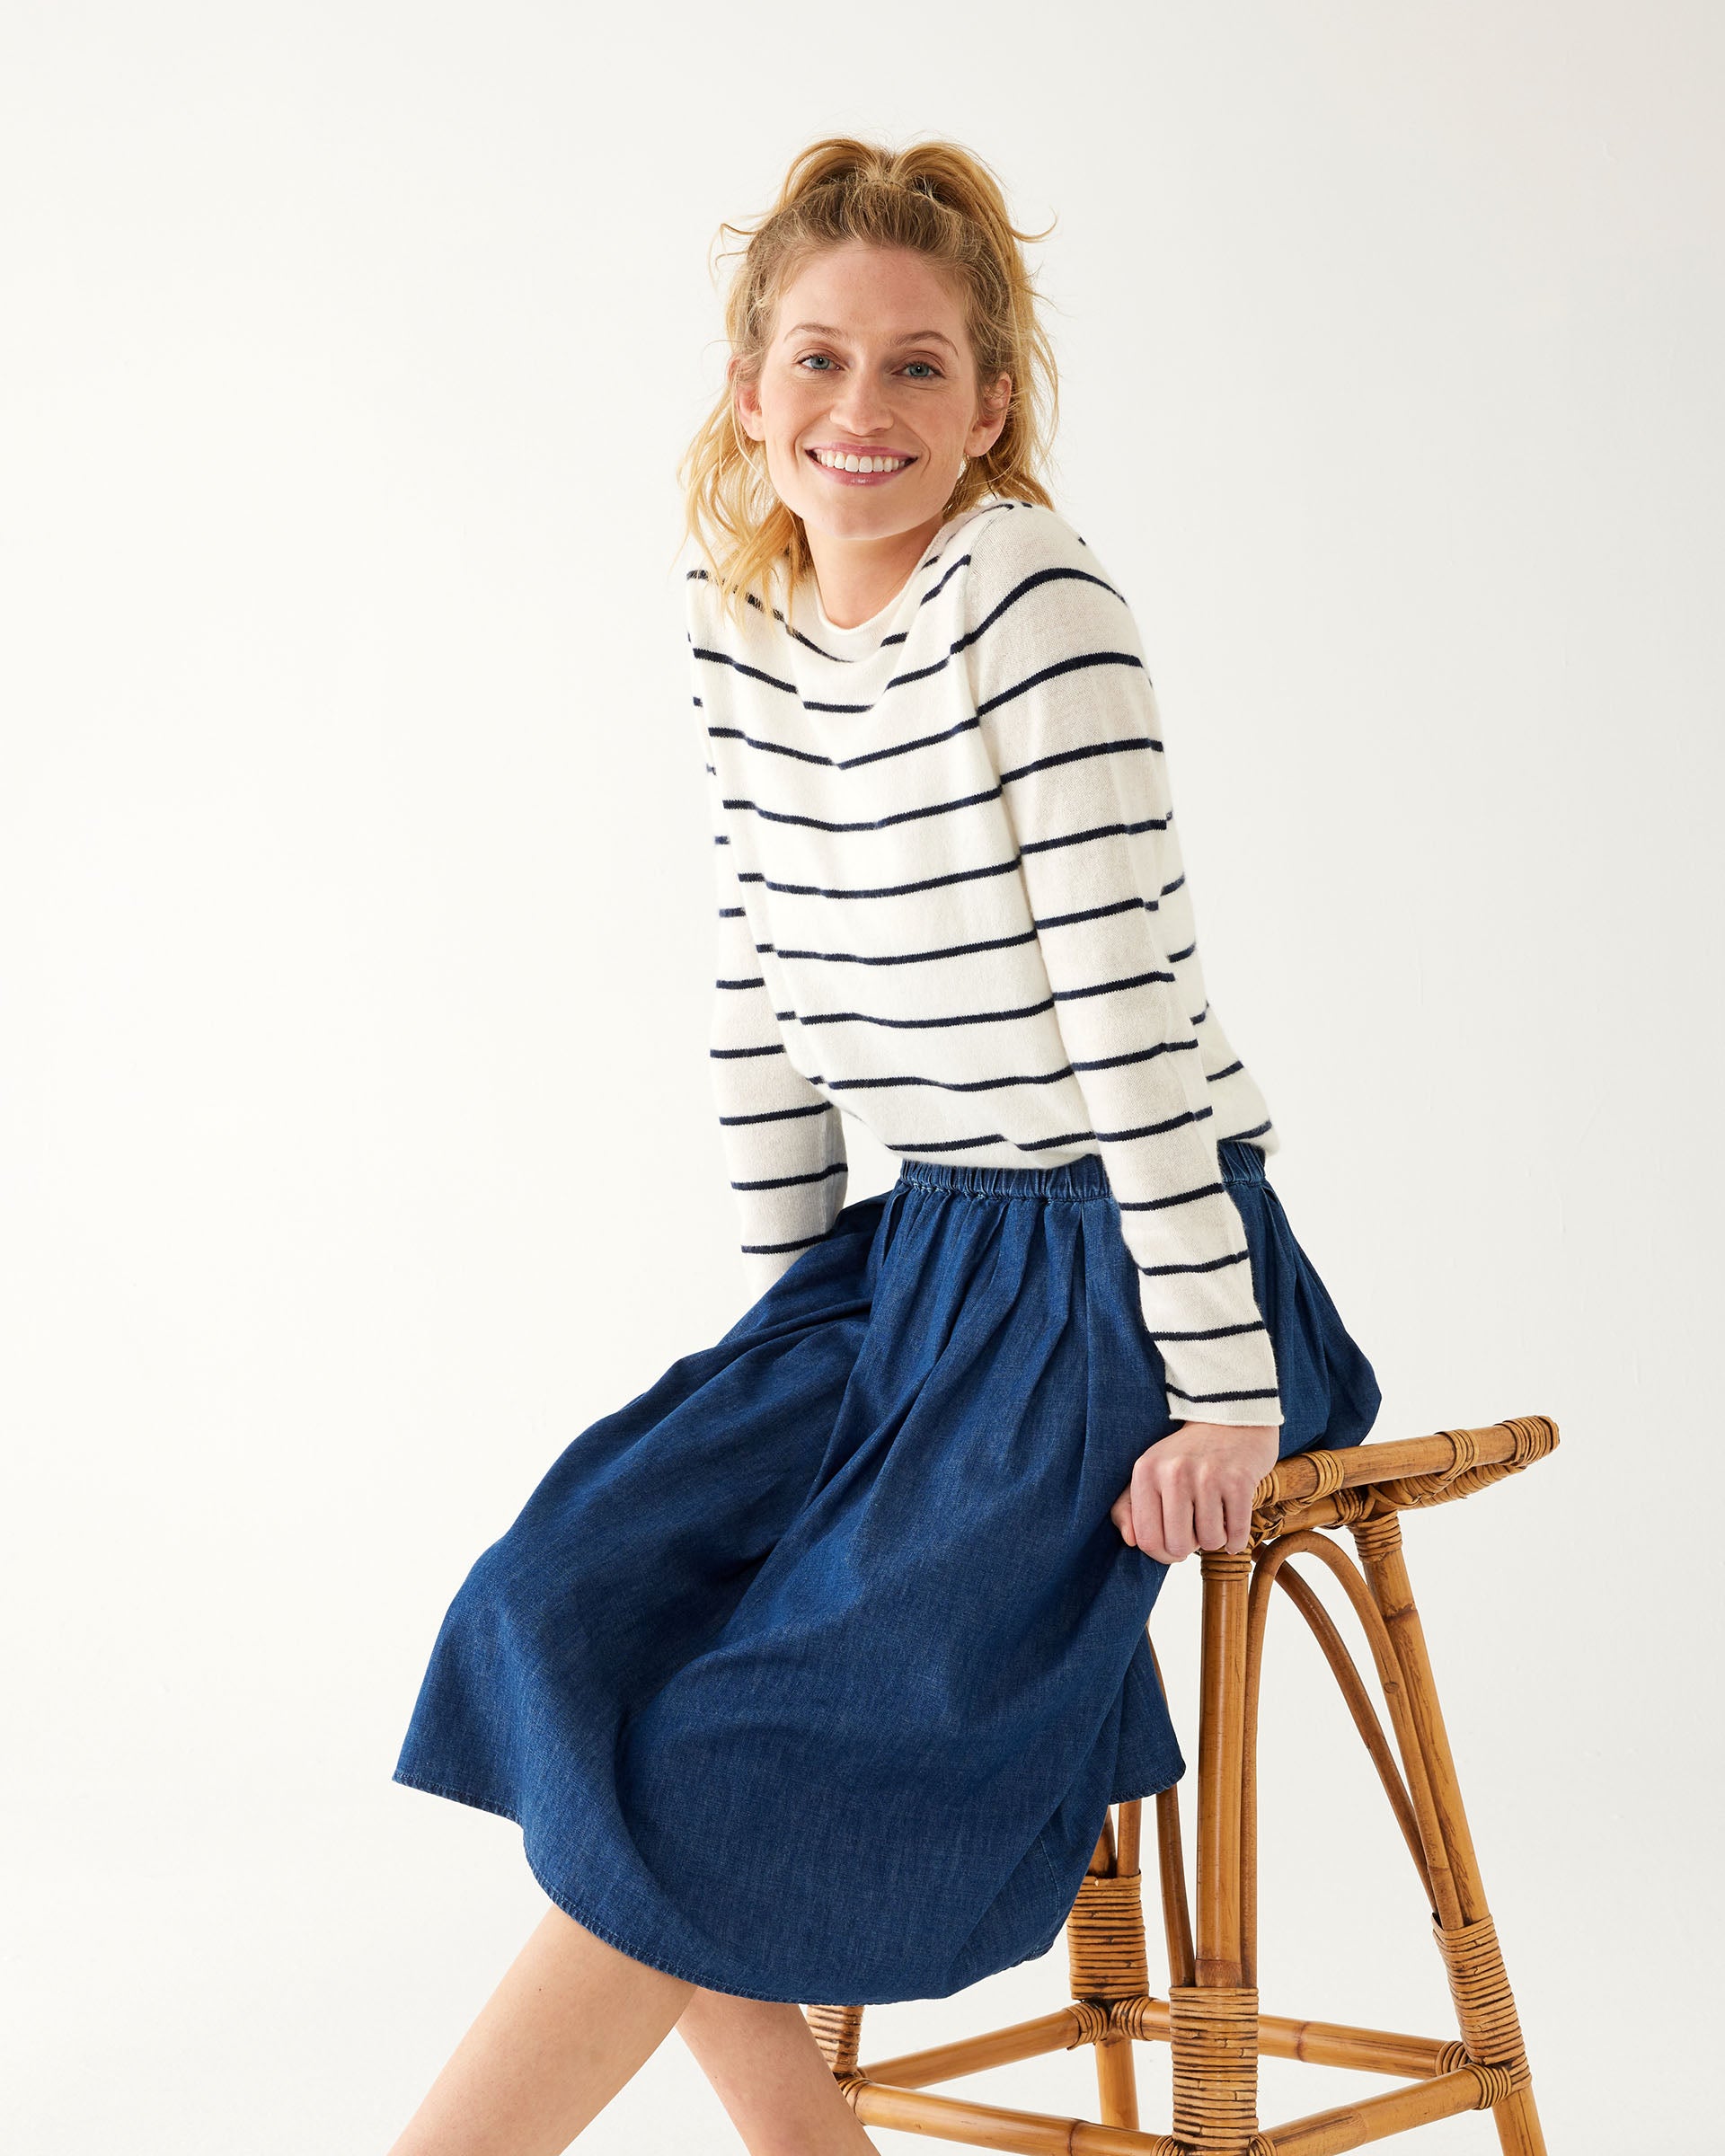 woman wearing Mersea carmel cashmere sweater in navy stripes sitting on stool leaning forward